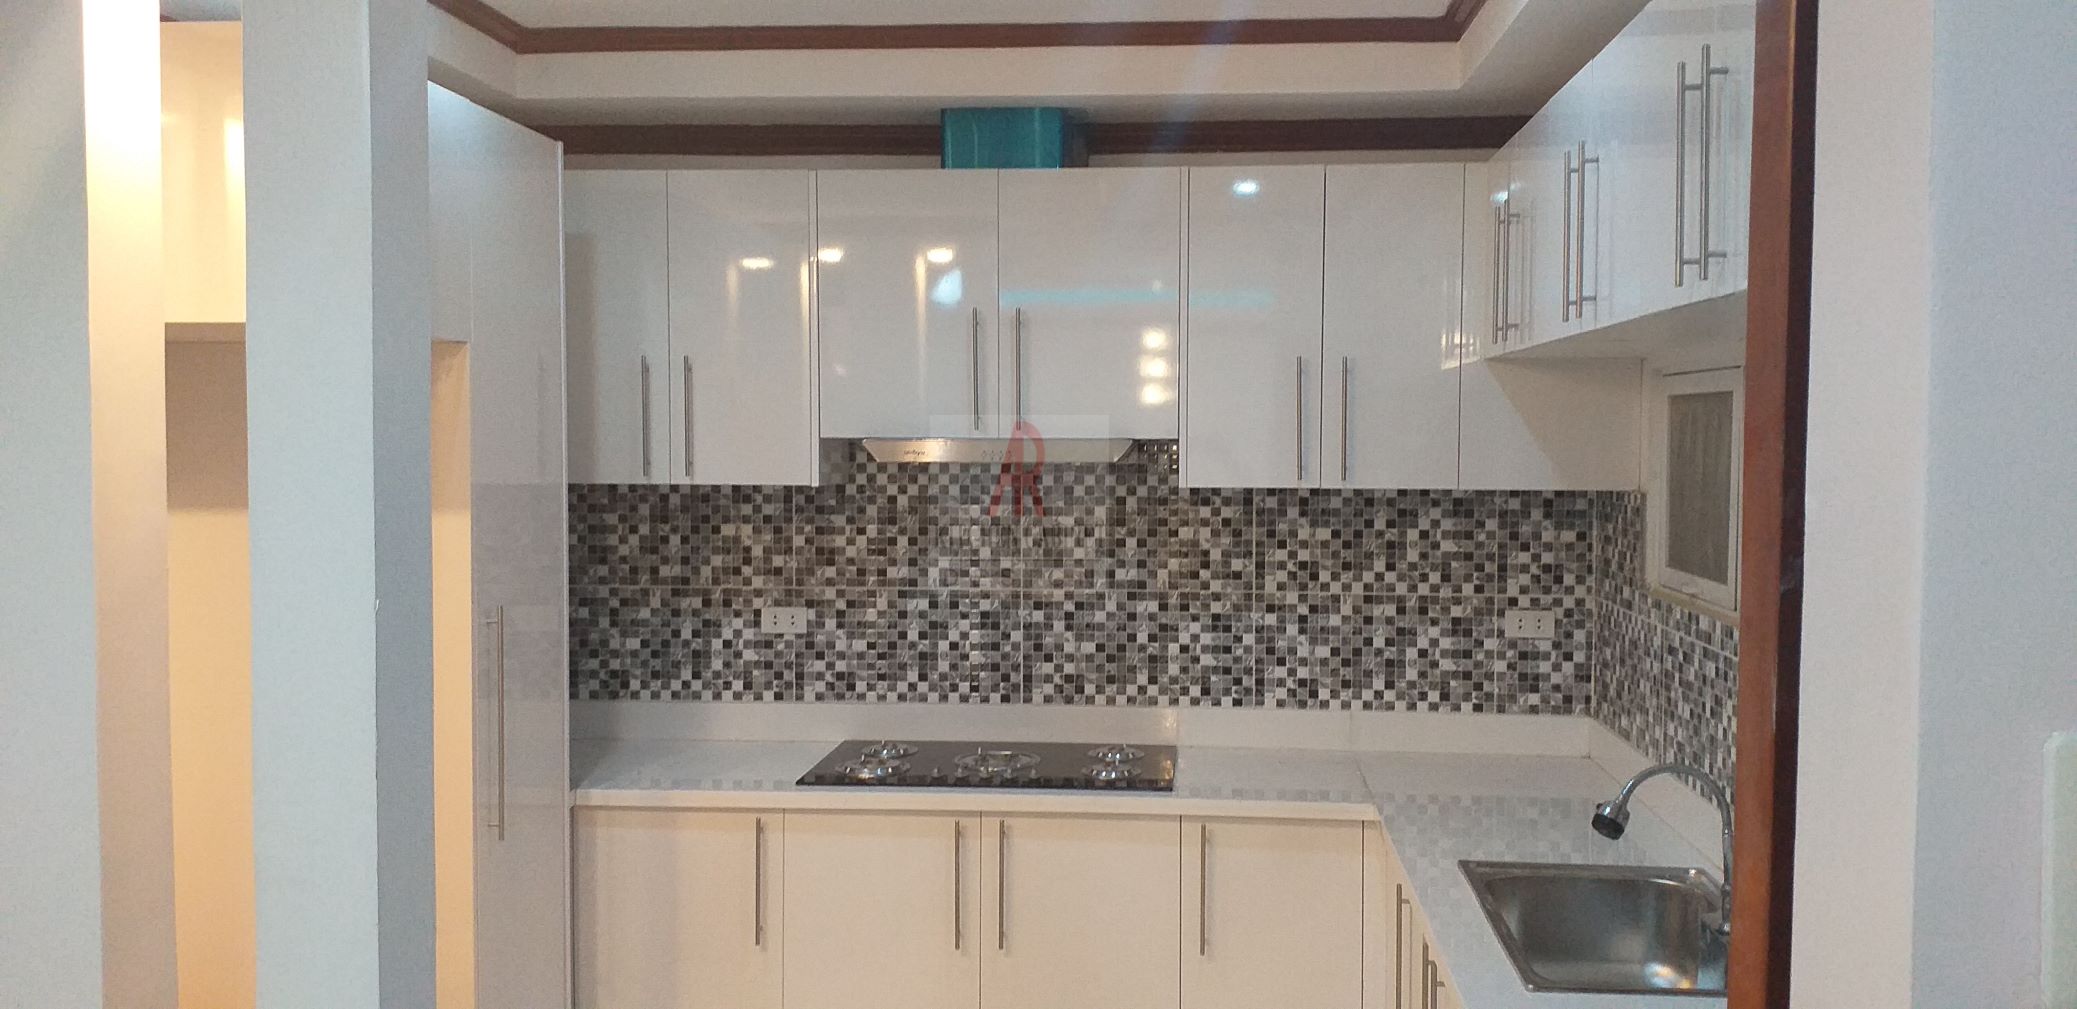 GLossy-White-kitchen-with-white-quartz-countertop